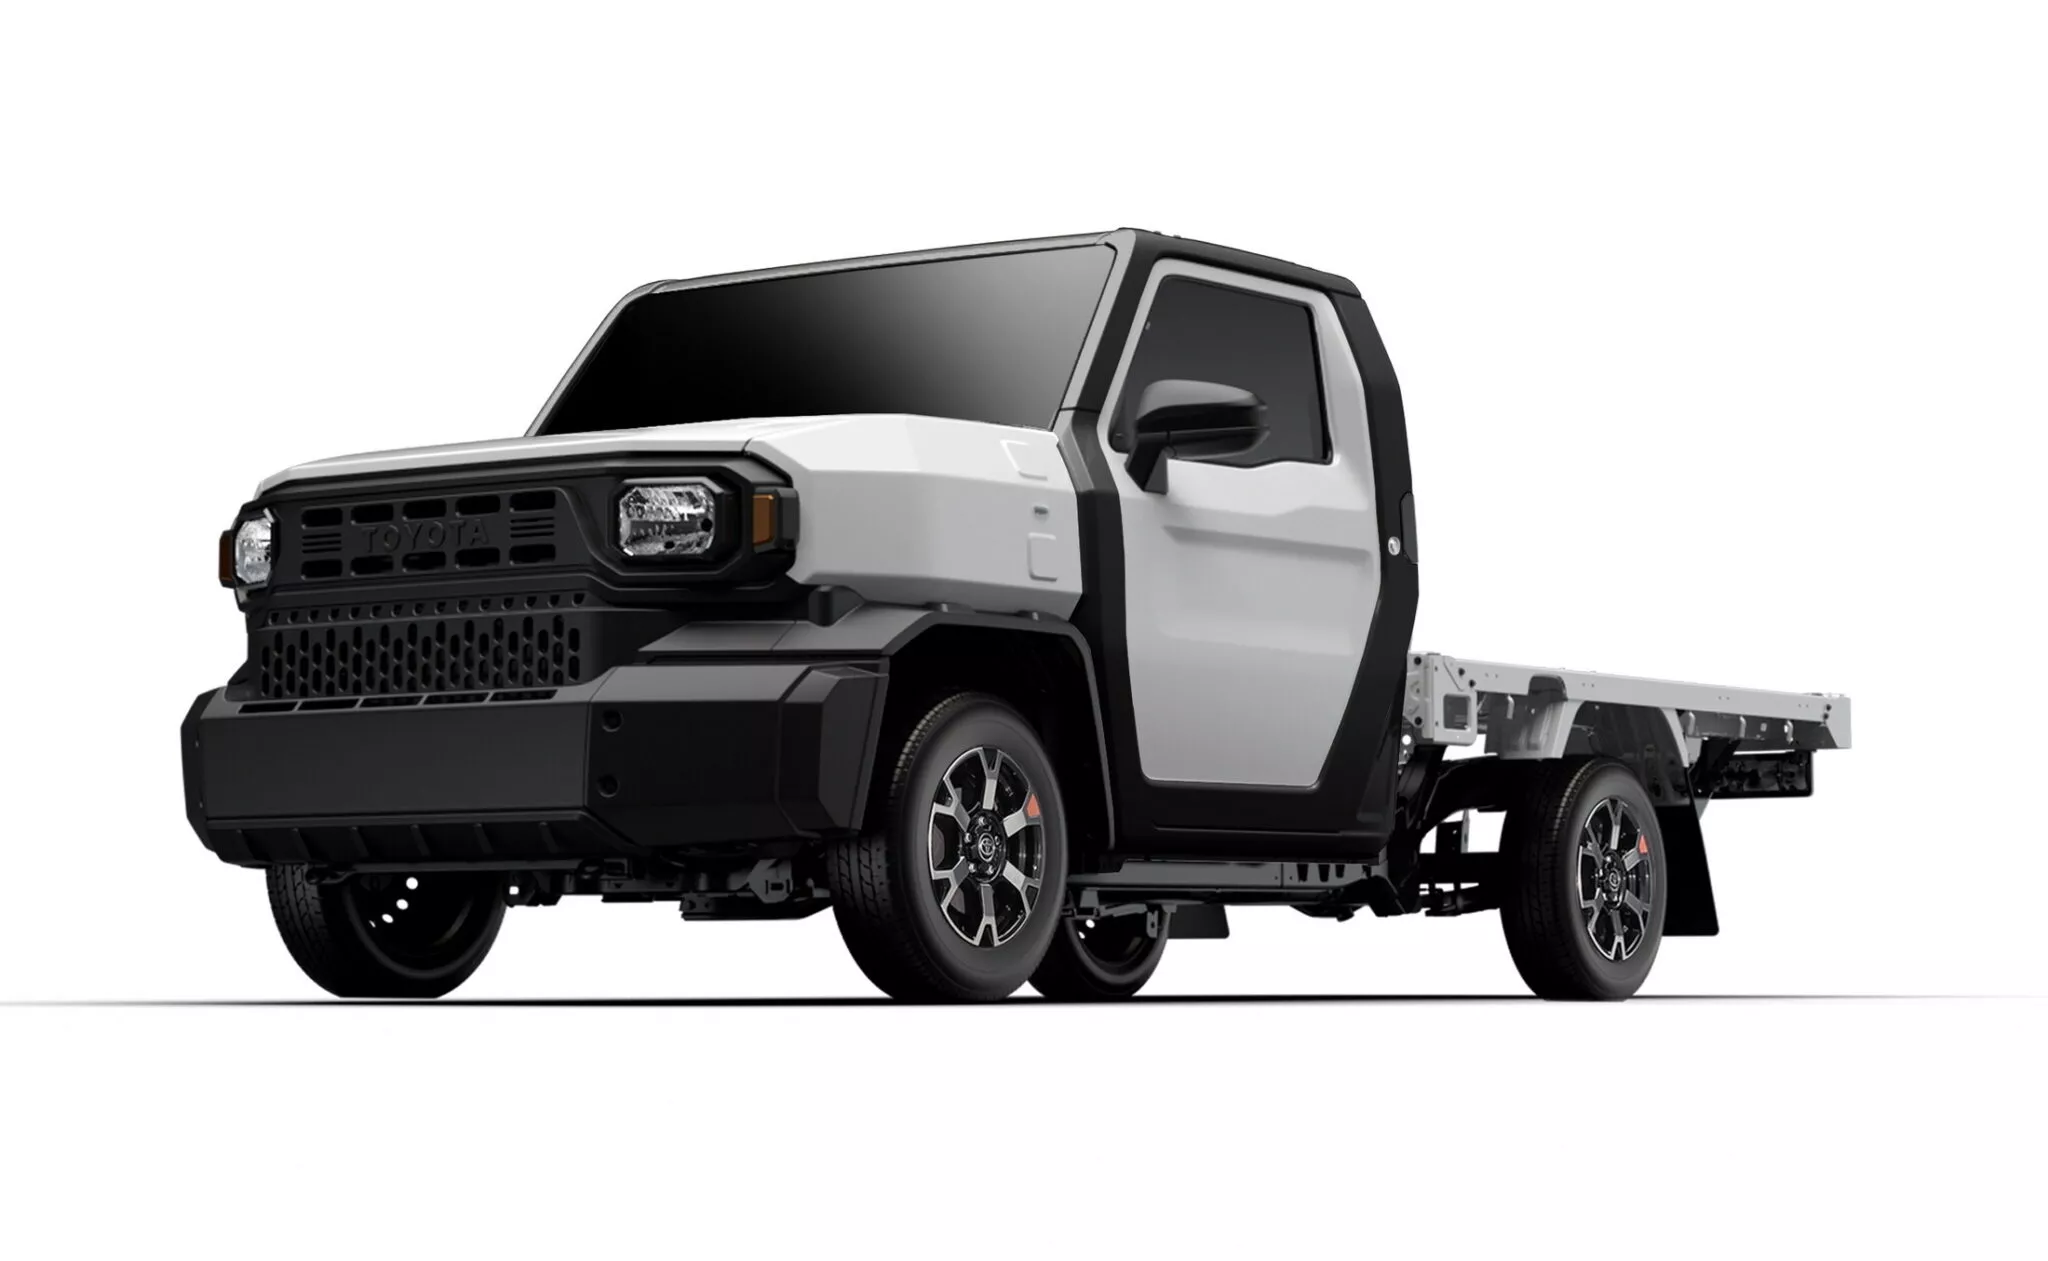 Toyota IMV 0: Hilux-sized pickup with unlimited customization capability toyota-imv-0-japan-mobility-show-2023-1-2048x1261.webp